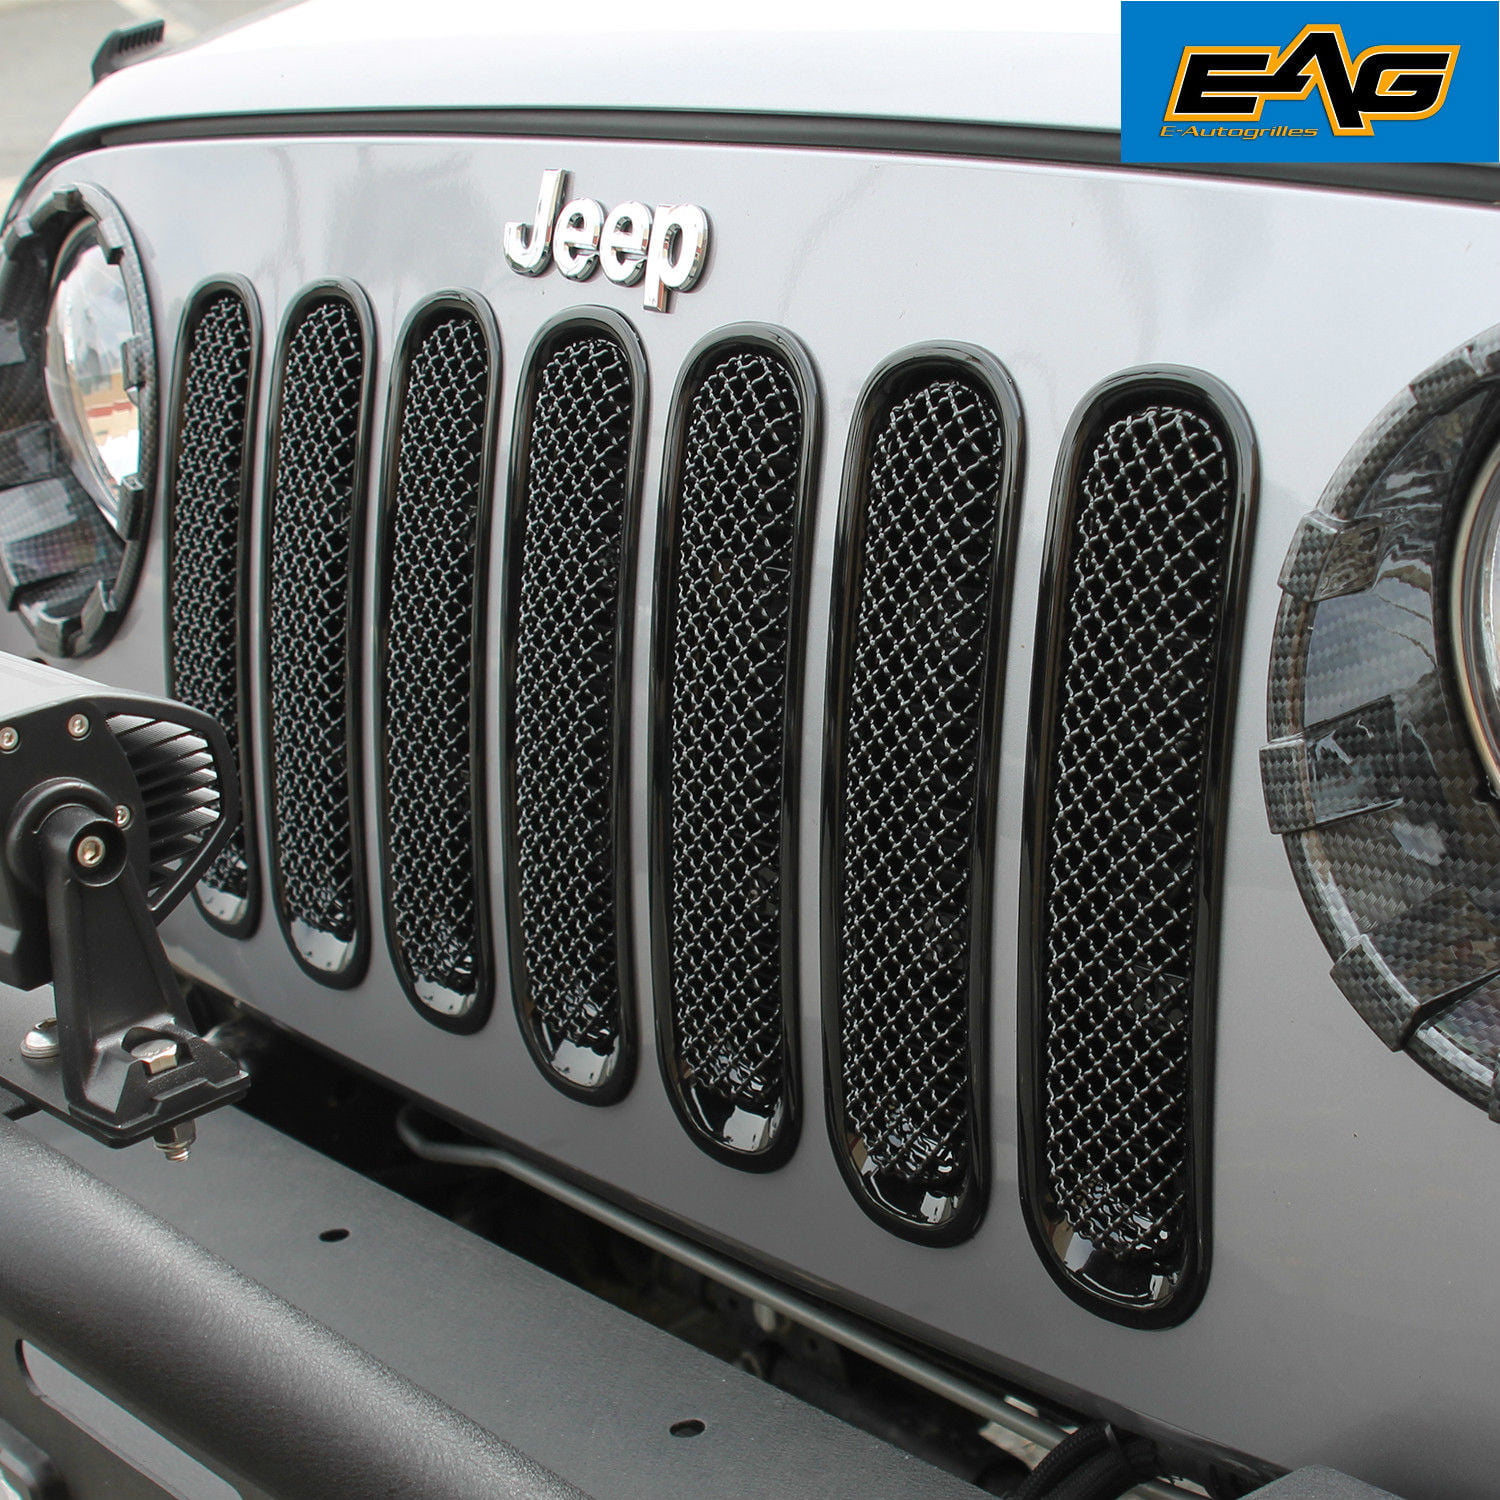 EAG Mesh Grille Insert in Black Stainless Steel - fits 07-17 Jeep Wrangler  JK - 1 set (7) 